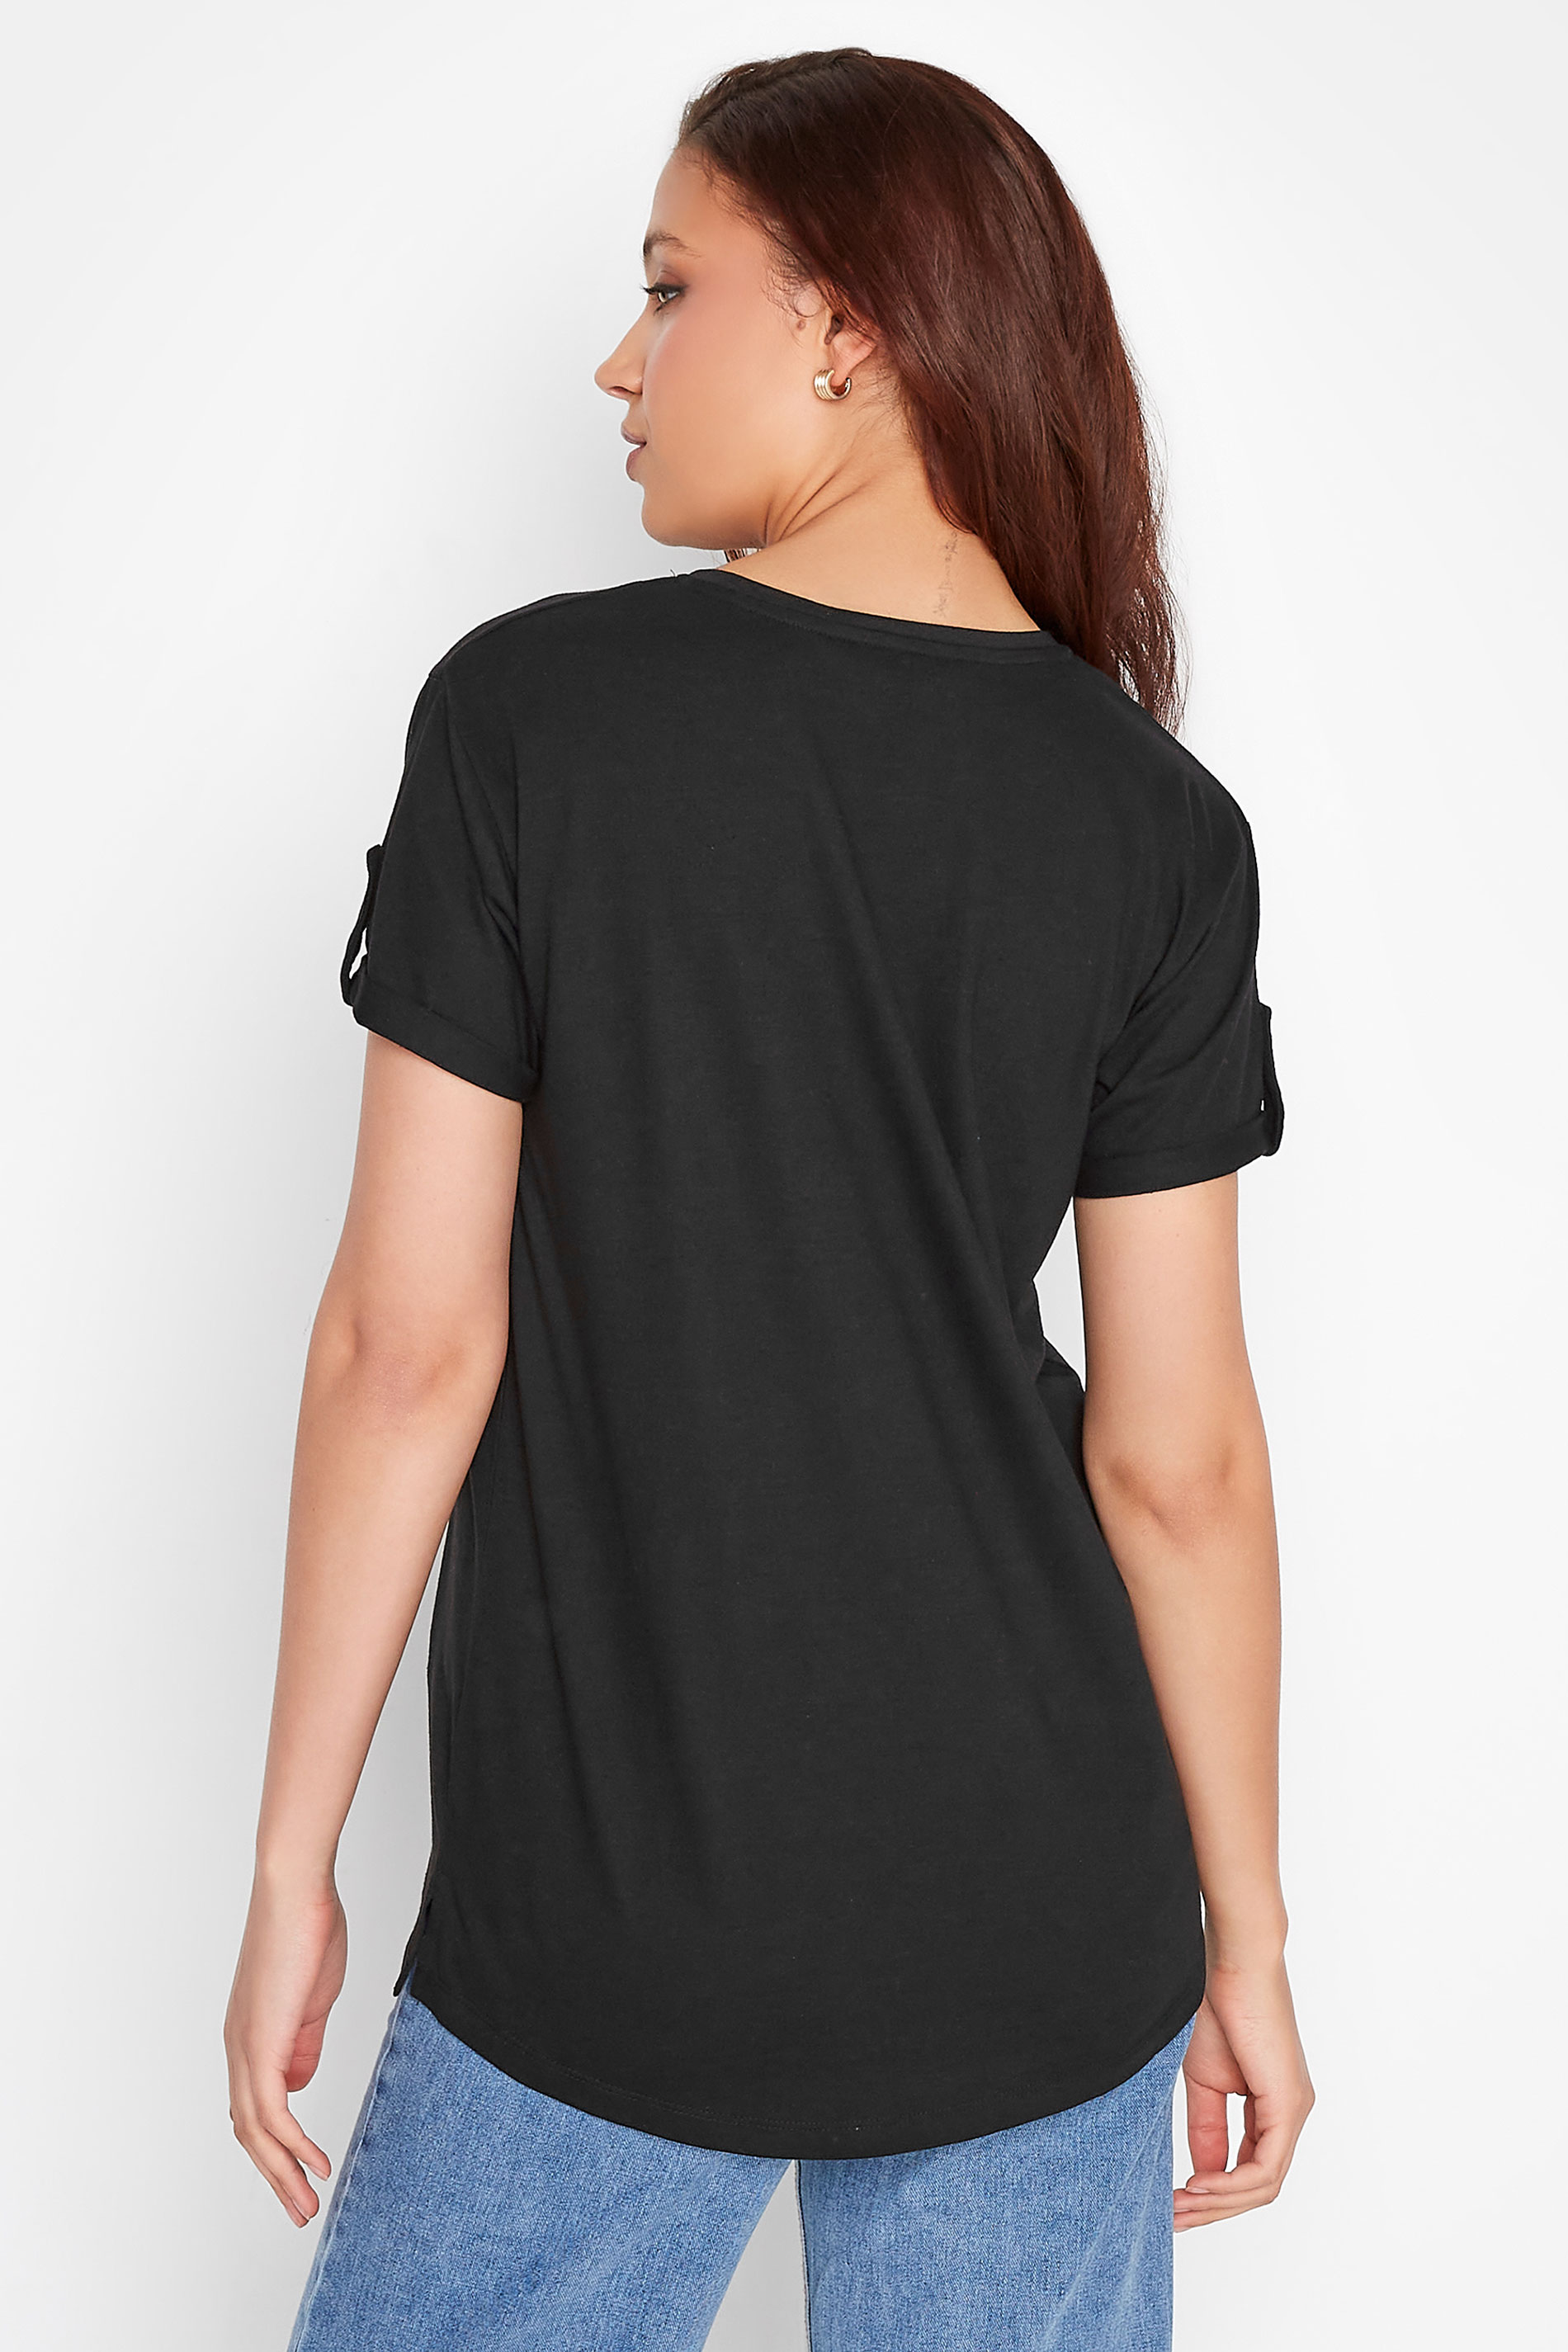 Tall Women's LTS Black Short Sleeve Pocket T-Shirt | Long Tall Sally 3